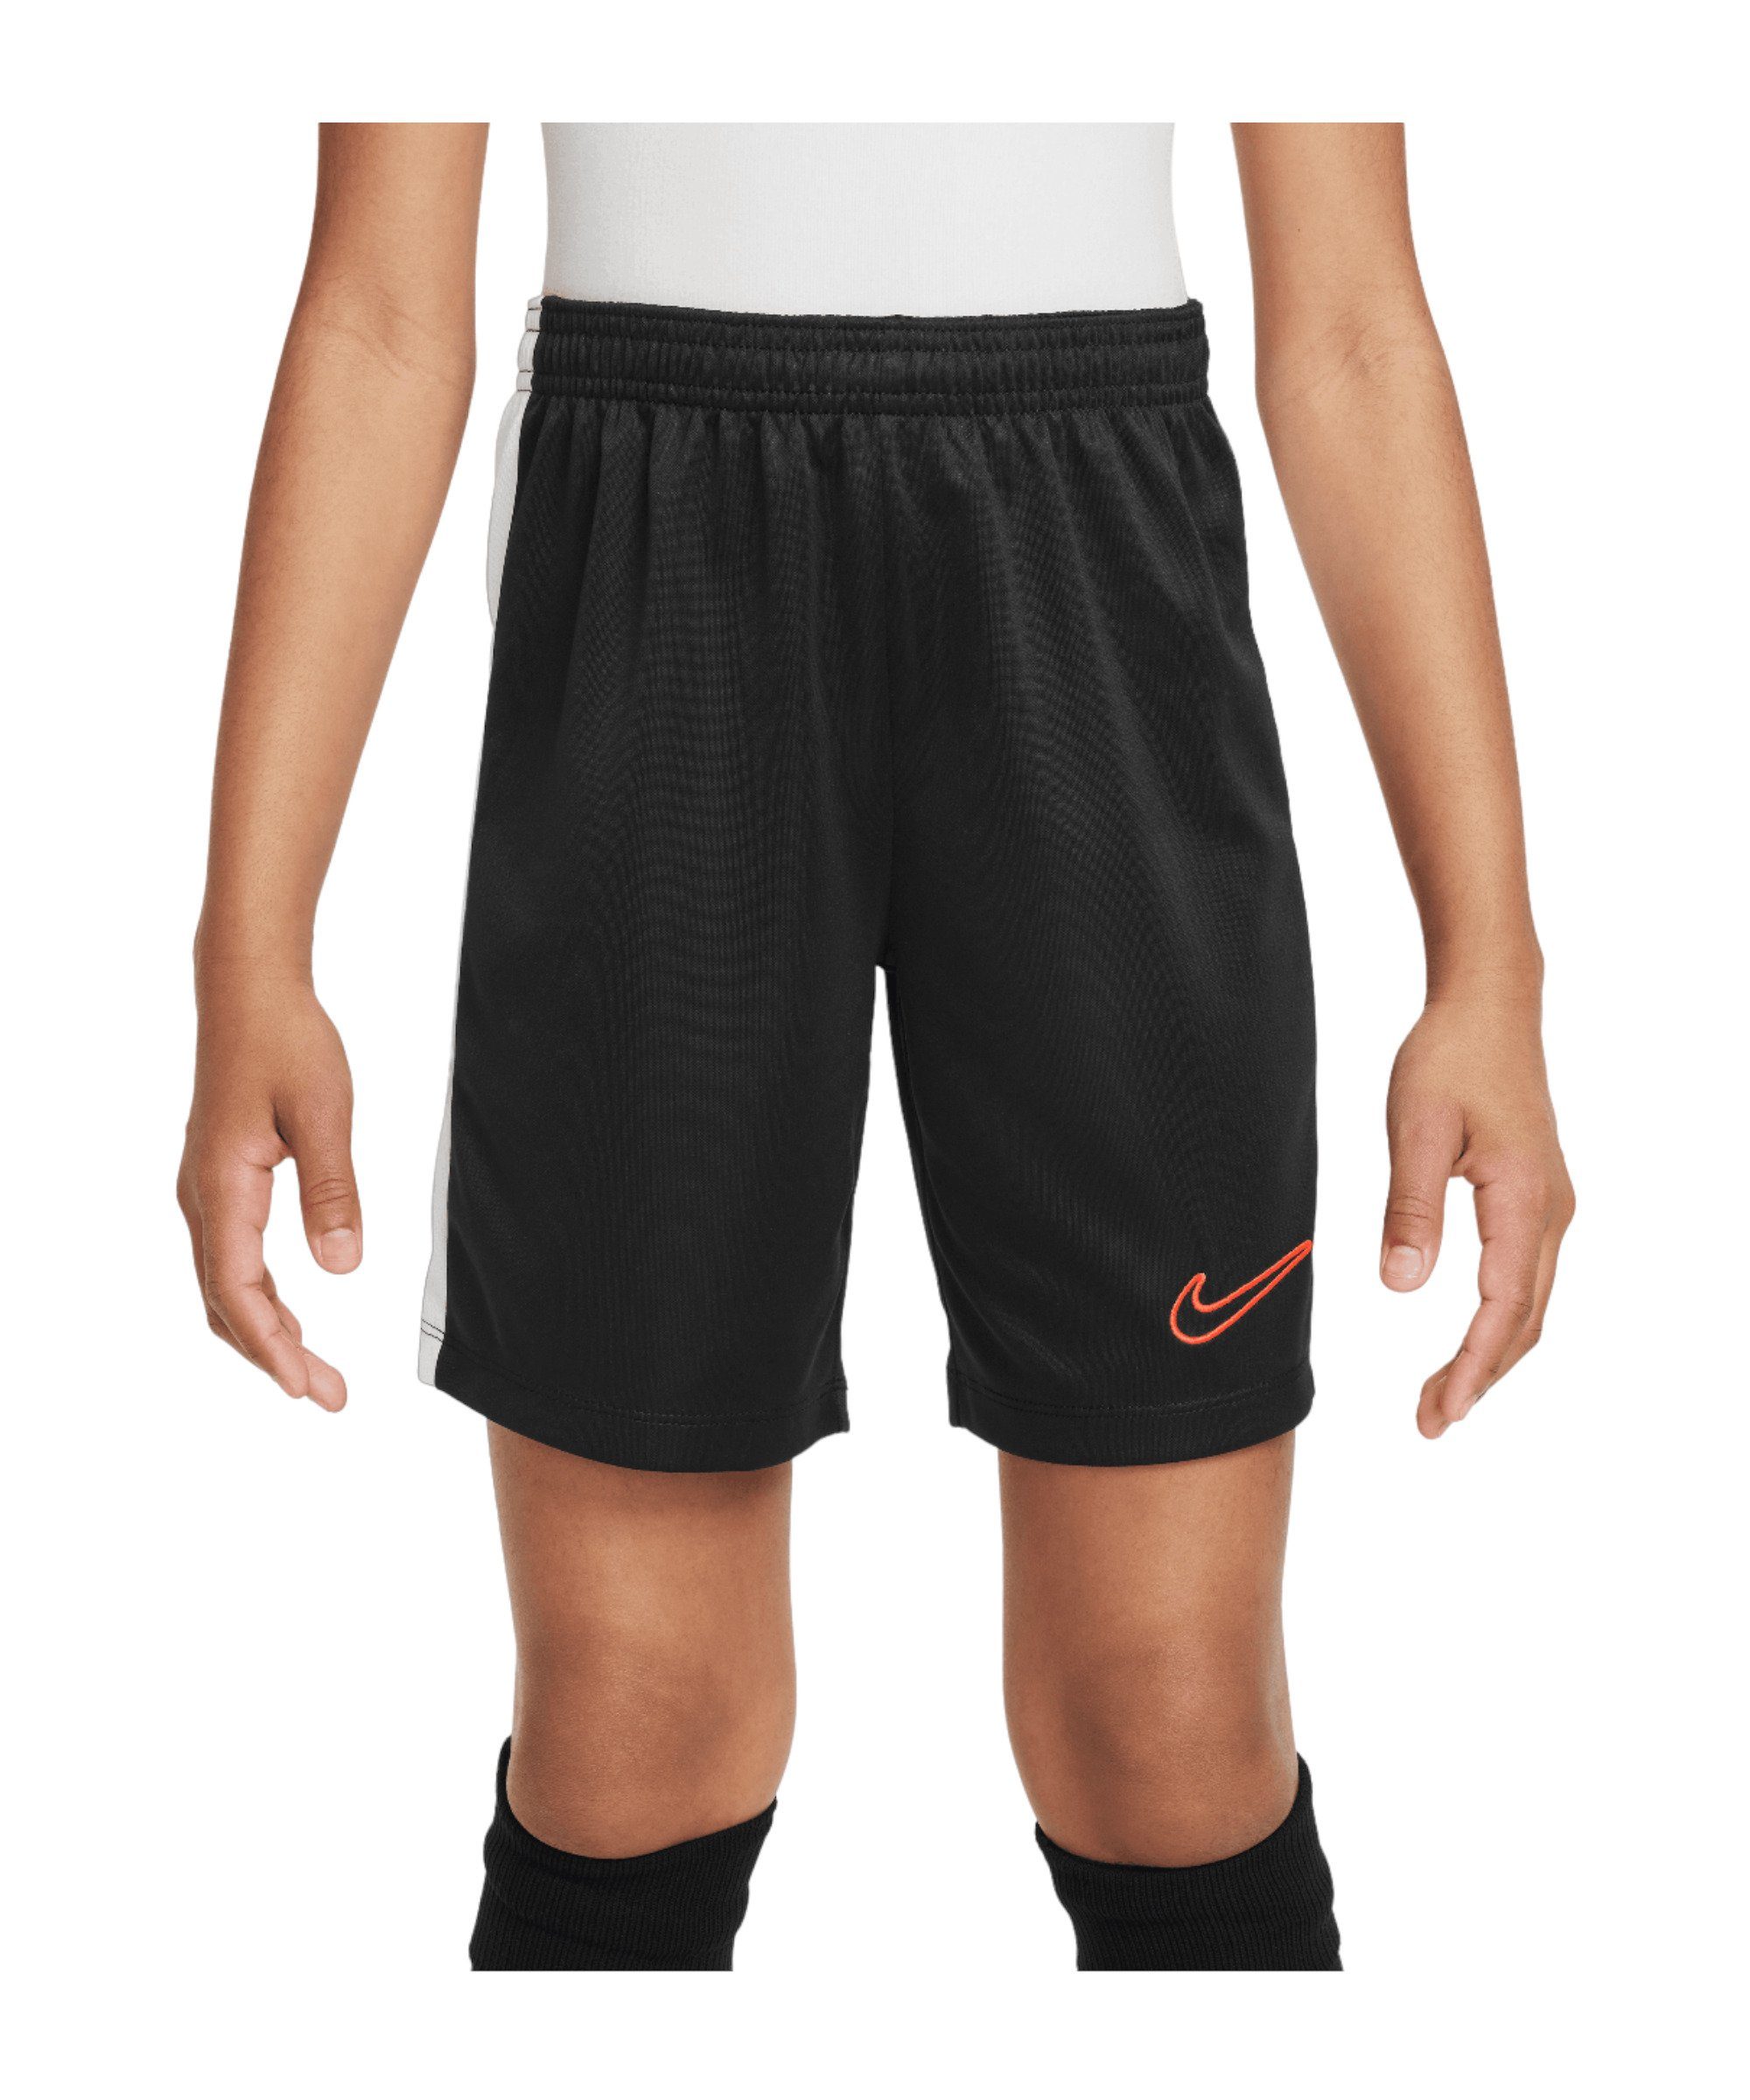 Academy Kids schwarzweissrot Short 23 Nike Sporthose